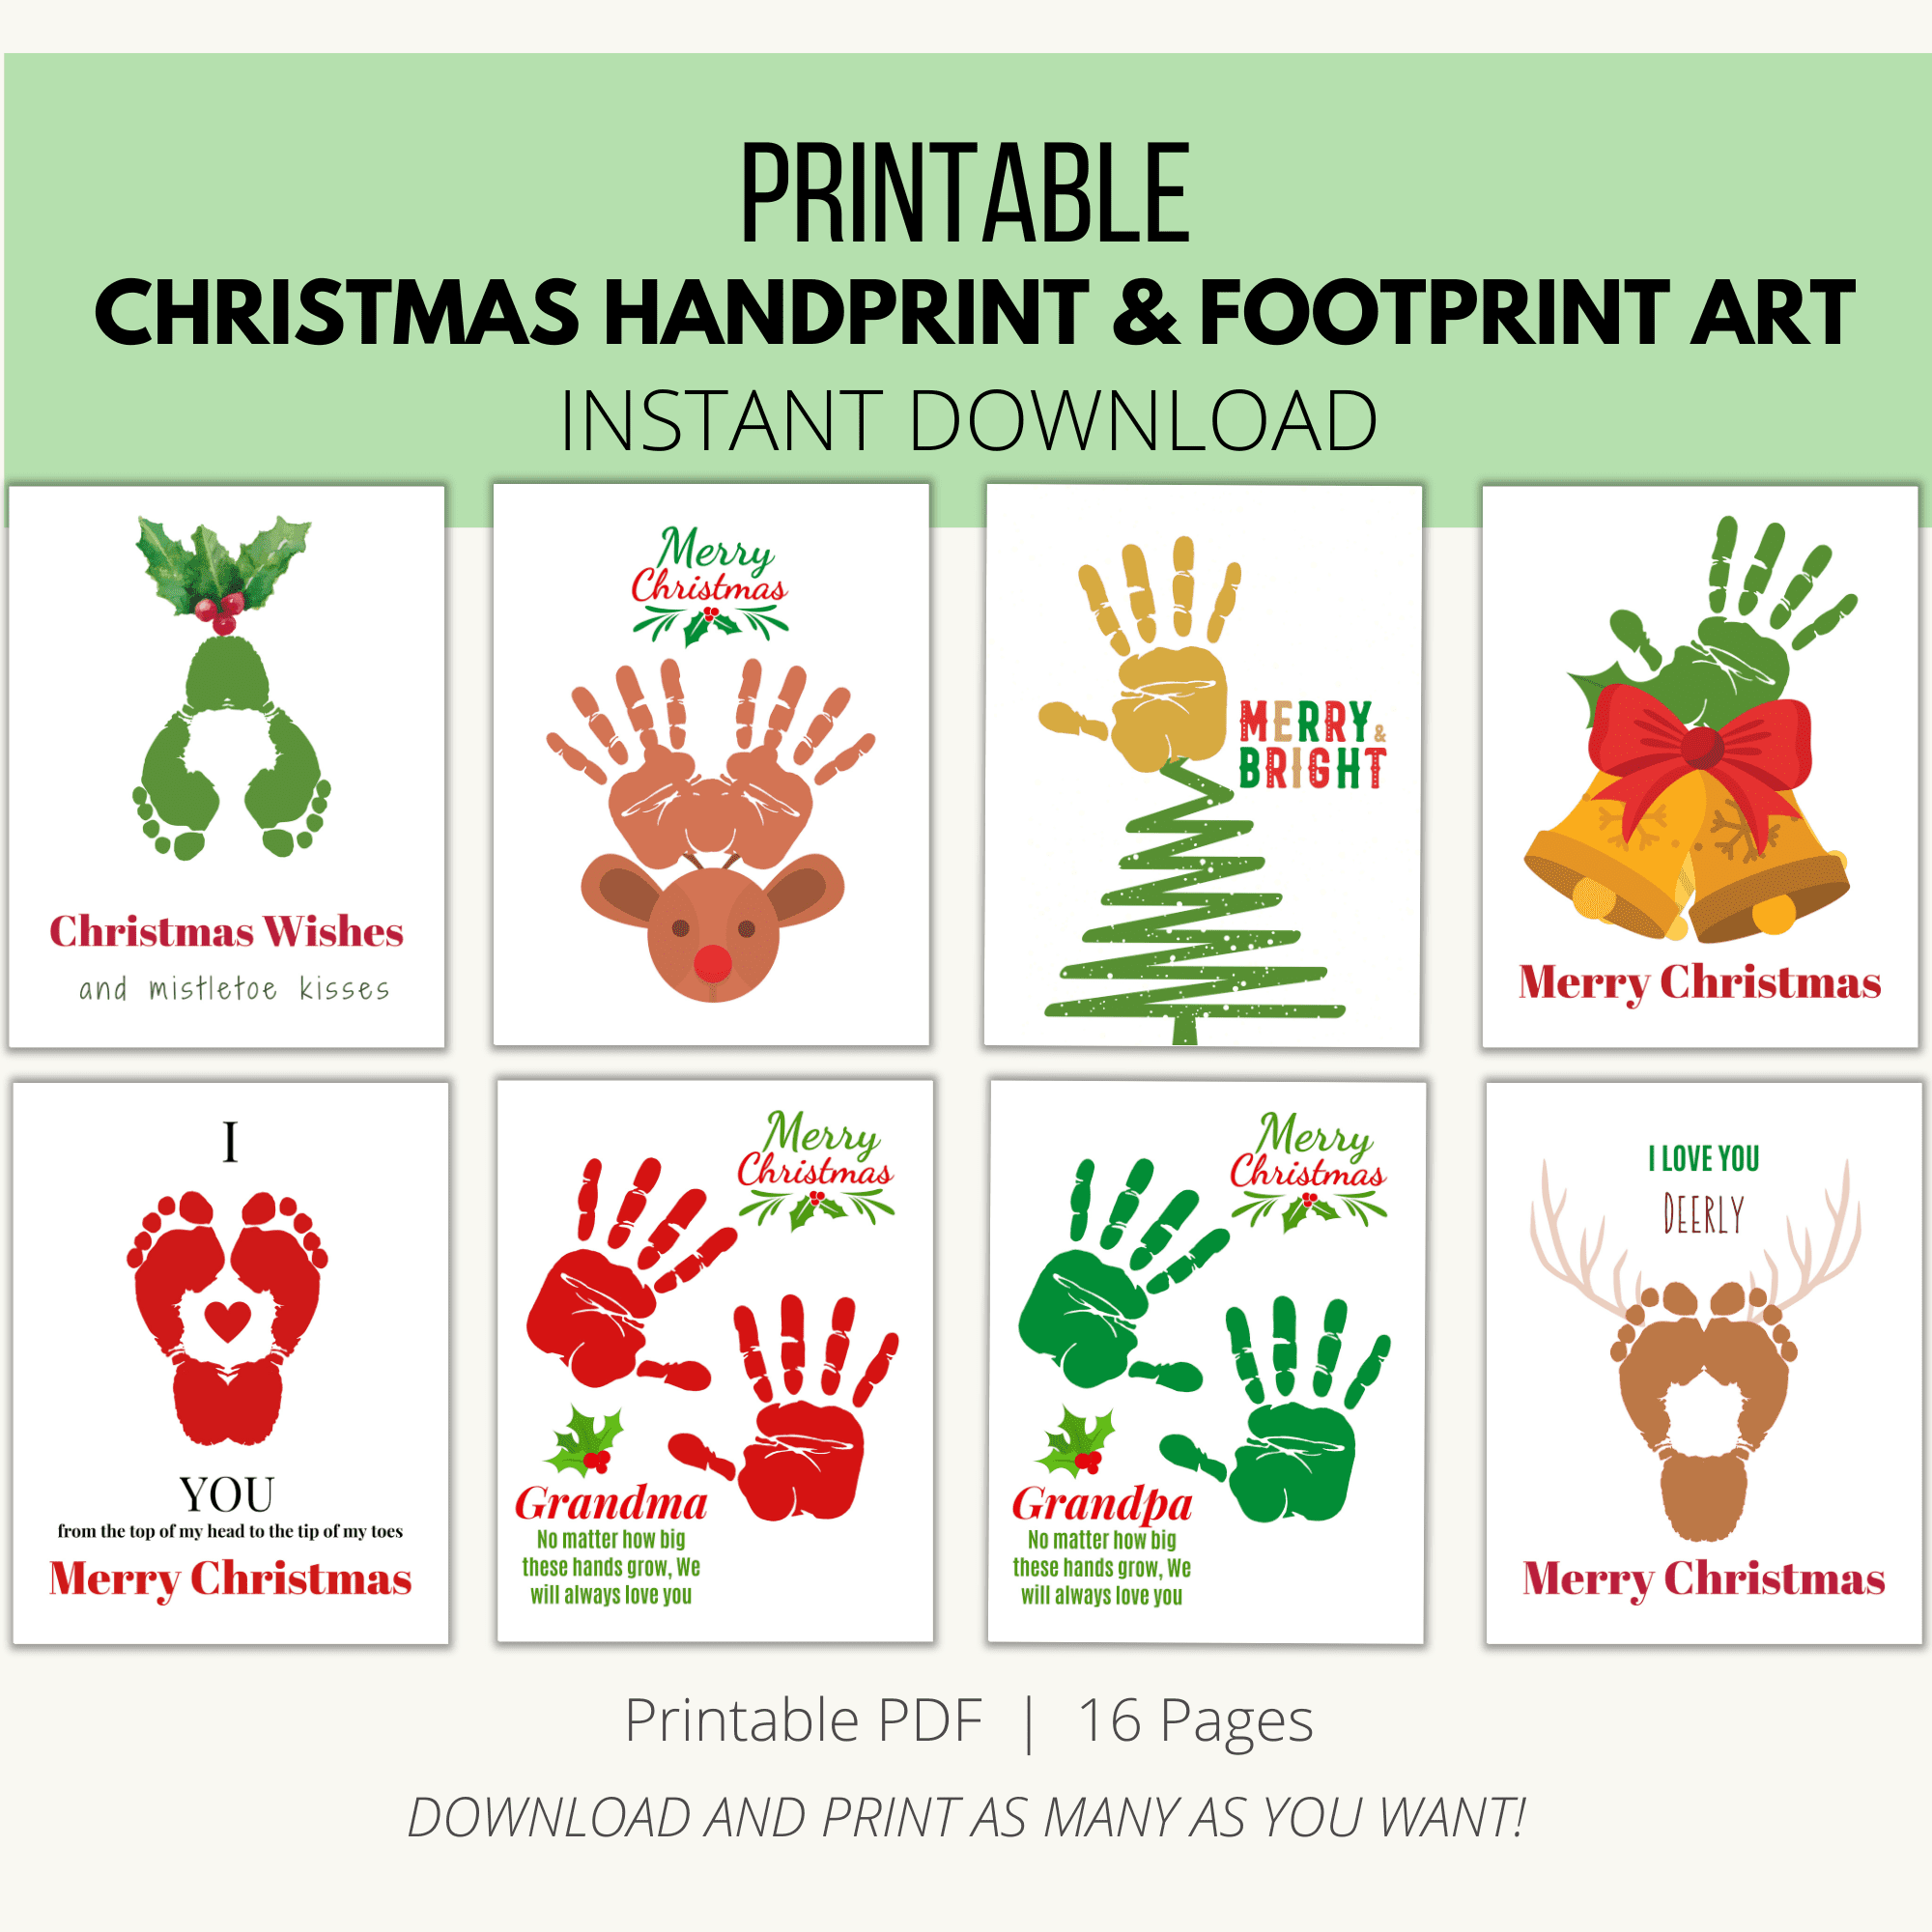 Printable Christmas Handprint & Footprint Art